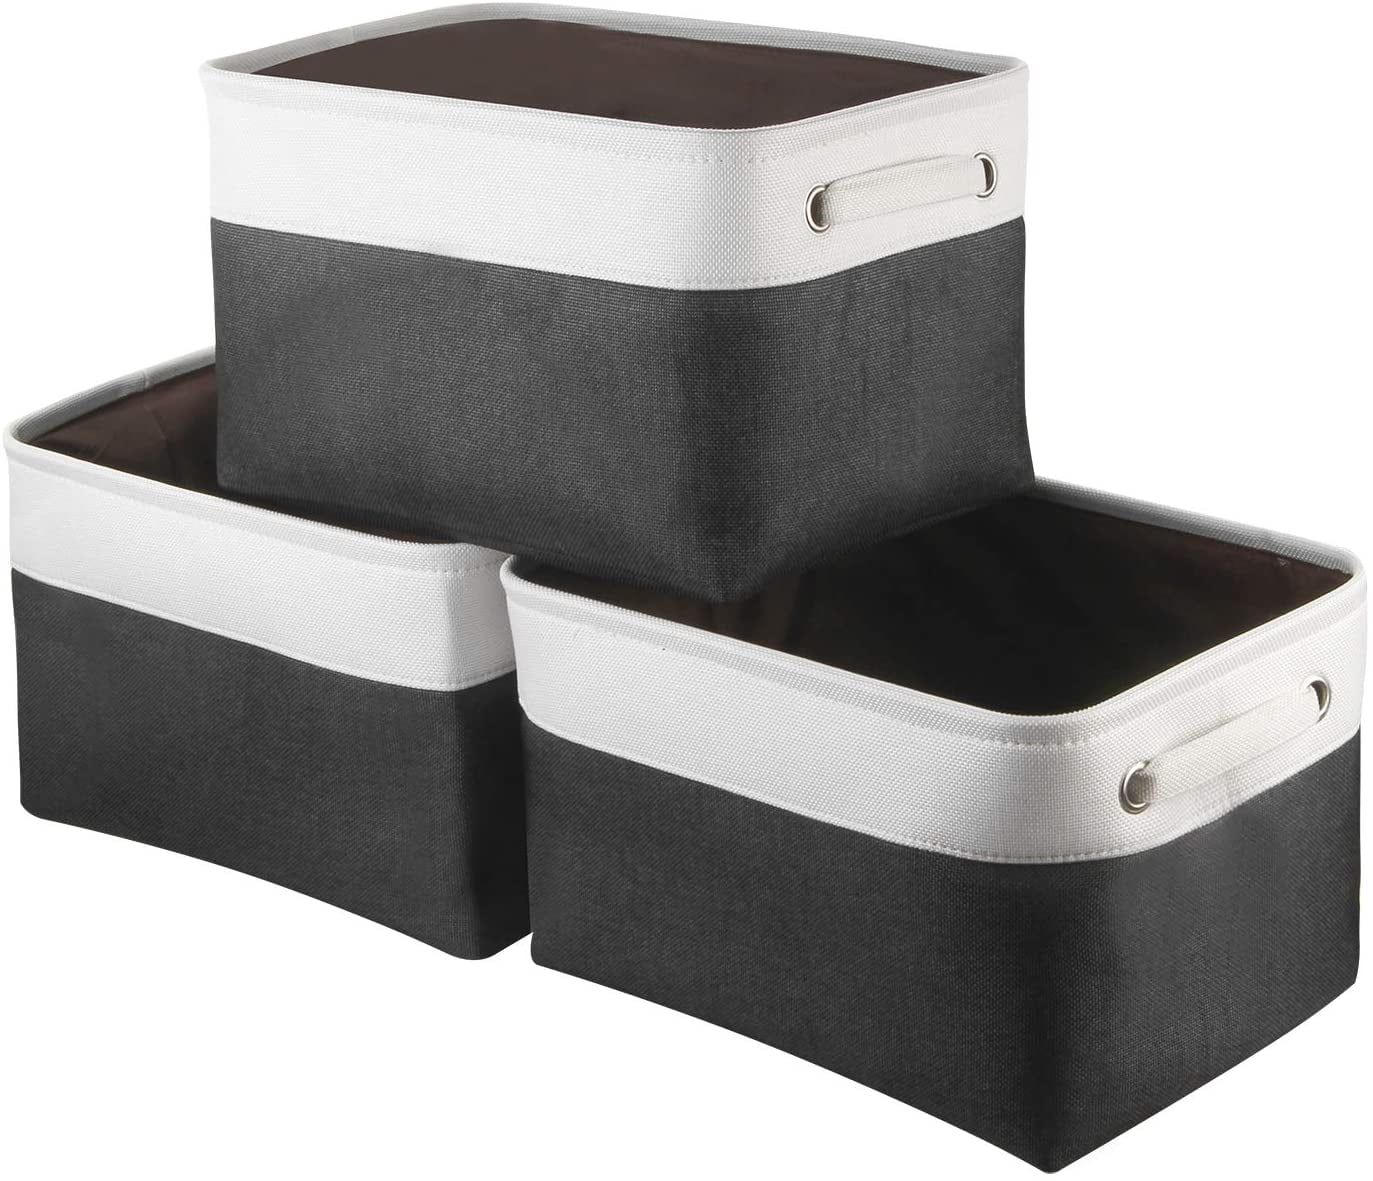 Foldable Storage Basket Collapsible Fabric Storage Boxes with Cotton Handles Organizer for Nursery Shelf Office Closet 3-Pack Awekris Closet Storage Bins Black, 15 x 9.8 x 8.6-3 Pack 